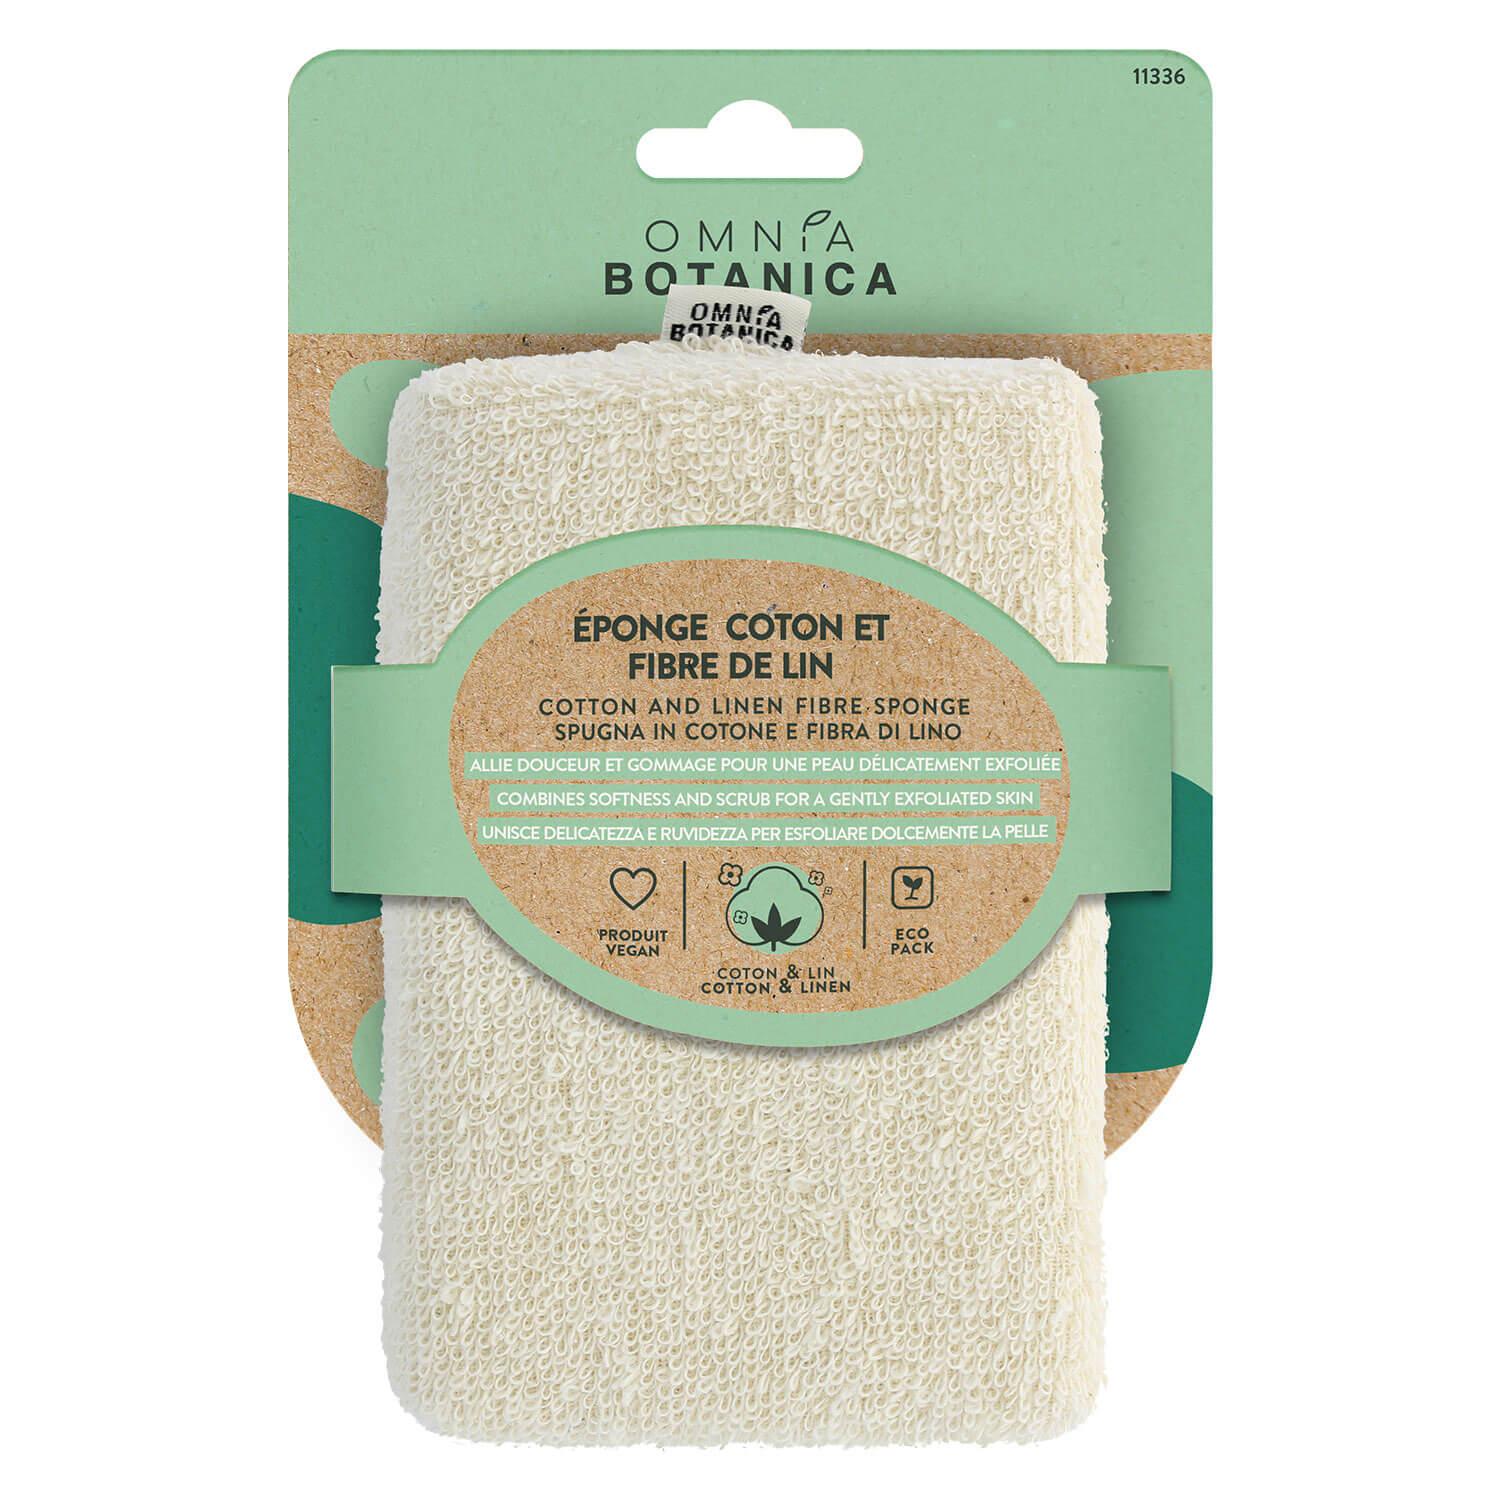 OMNIA BOTANICA - Eponge coton et fibres de lin